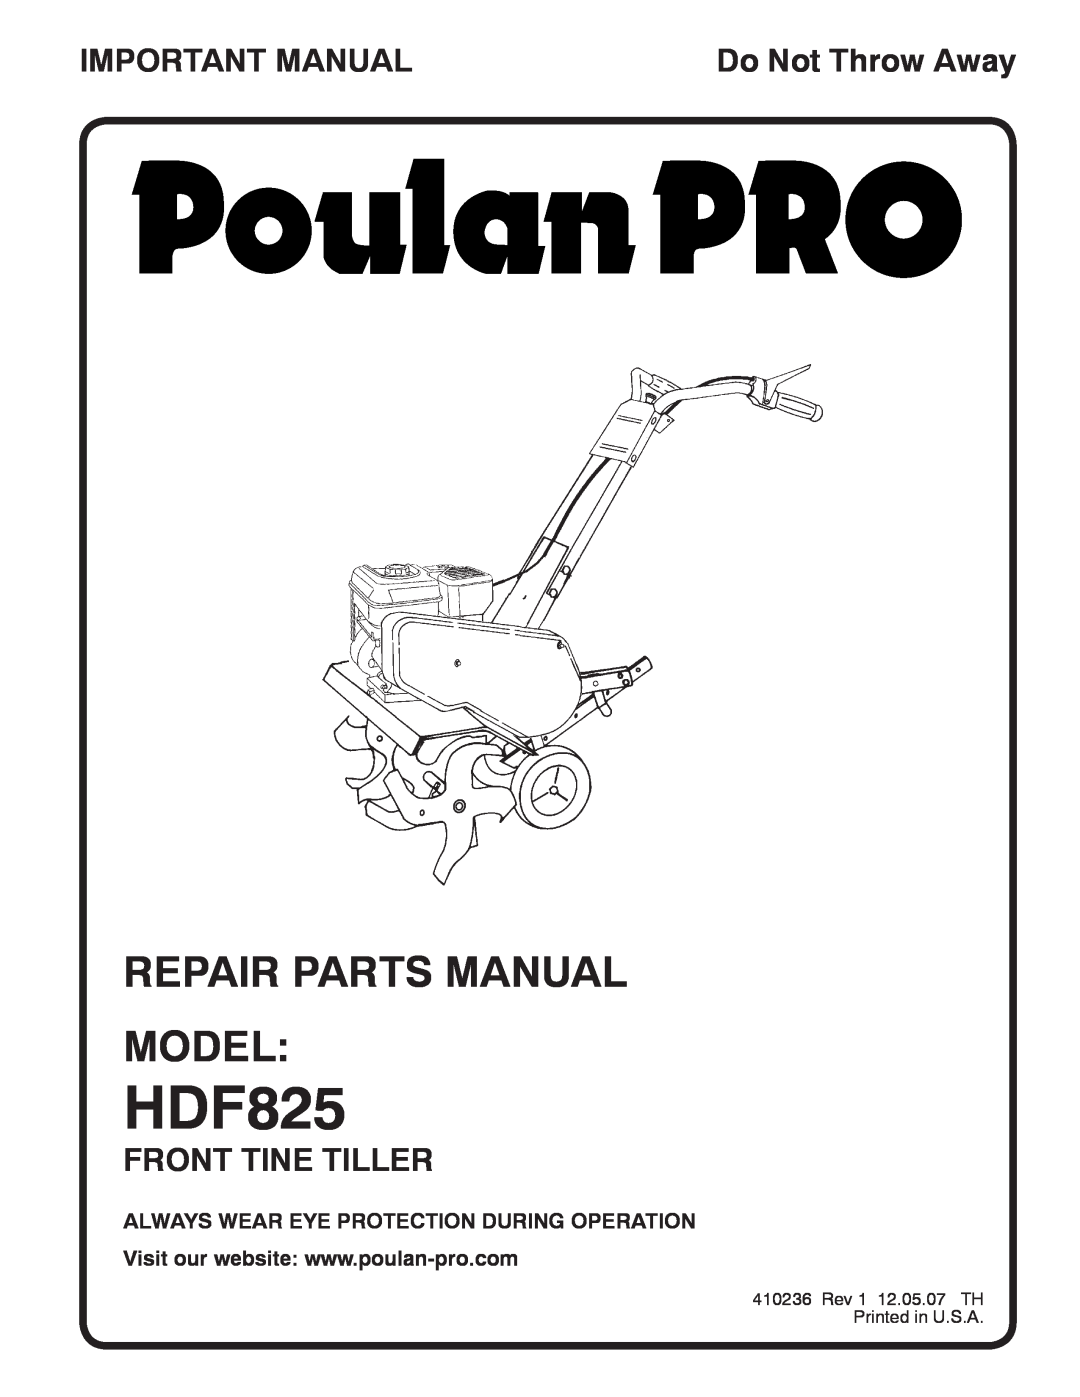 Poulan 96082000300 manual Repair Parts Manual Model, HDF825, Important Manual, Front Tine Tiller, Do Not Throw Away 